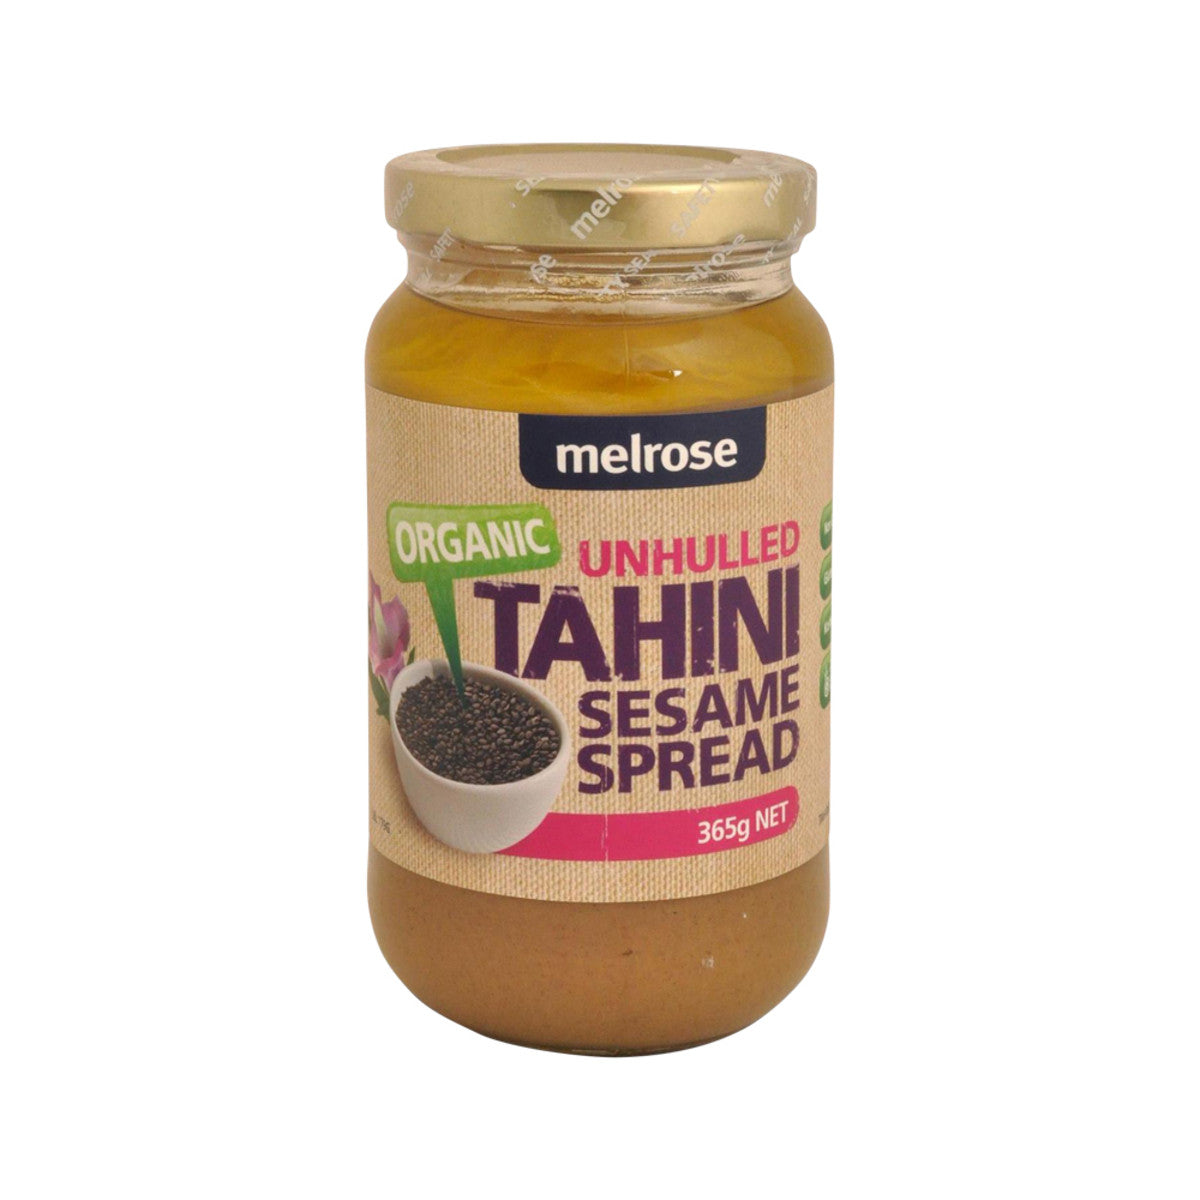 Melrose Organic Tahini Sesame Spread Unhulled 365g-The Living Co.